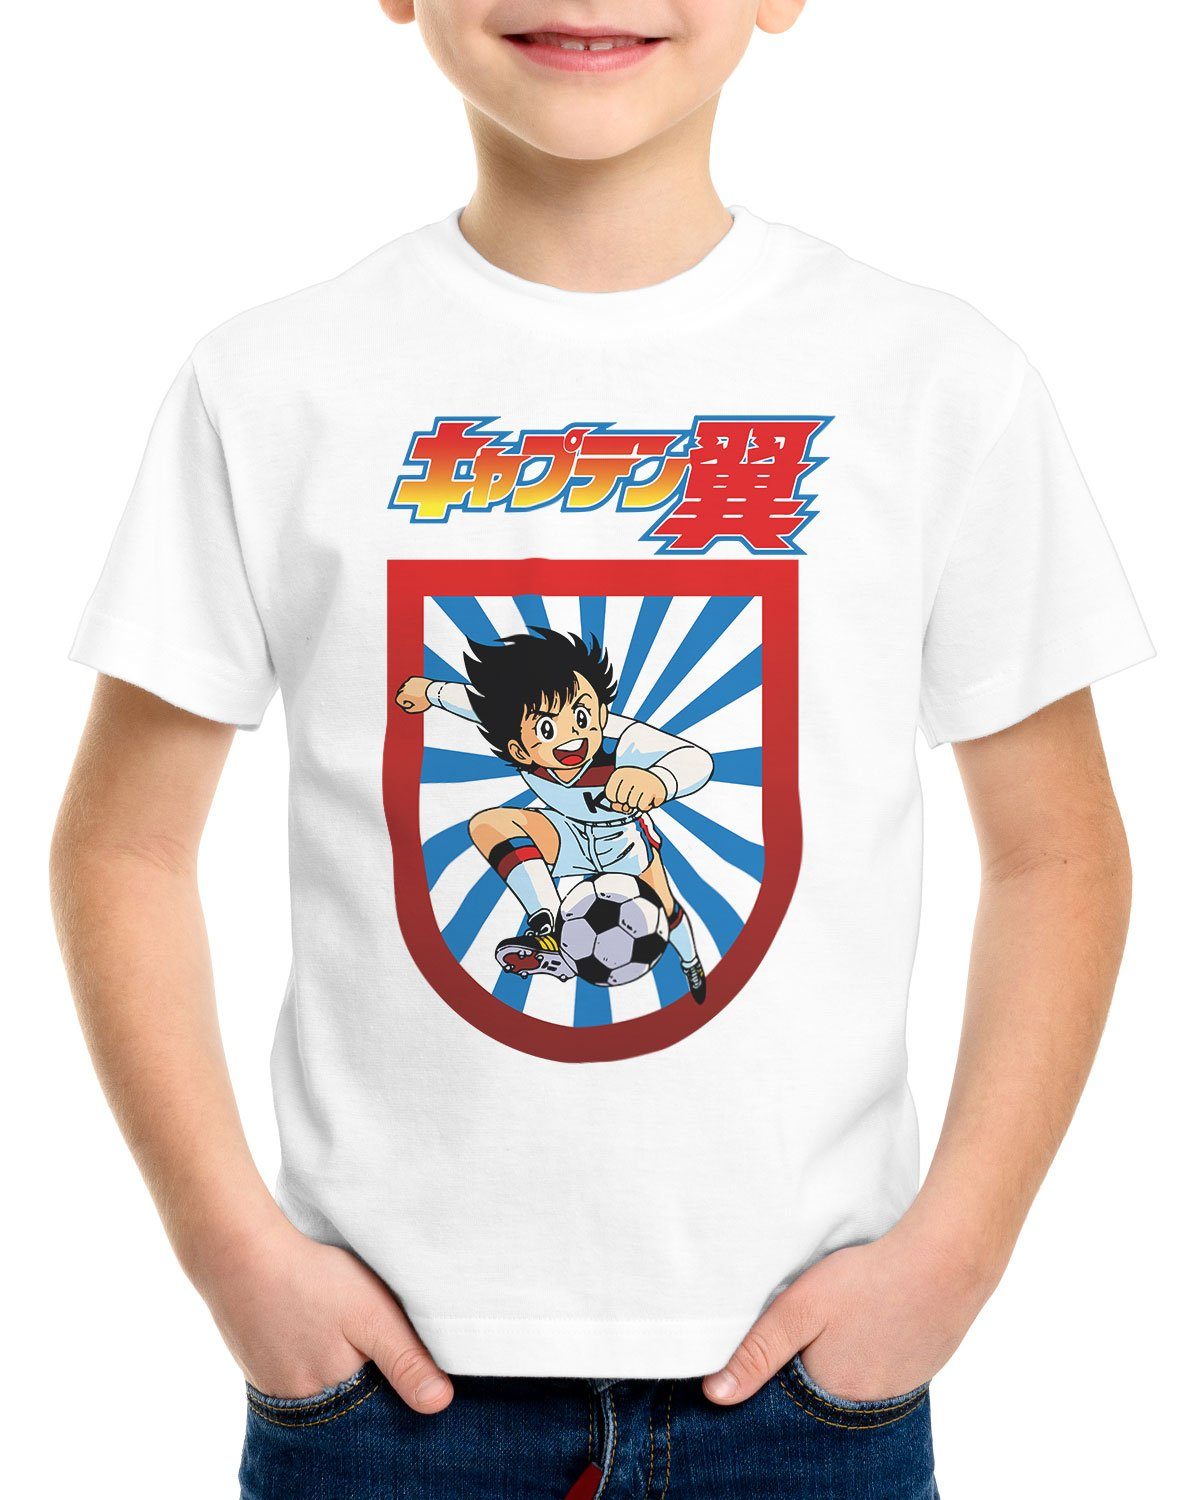 style3 Print-Shirt Kinder T-Shirt fußballstars Tsubasa em weiß tollen wm